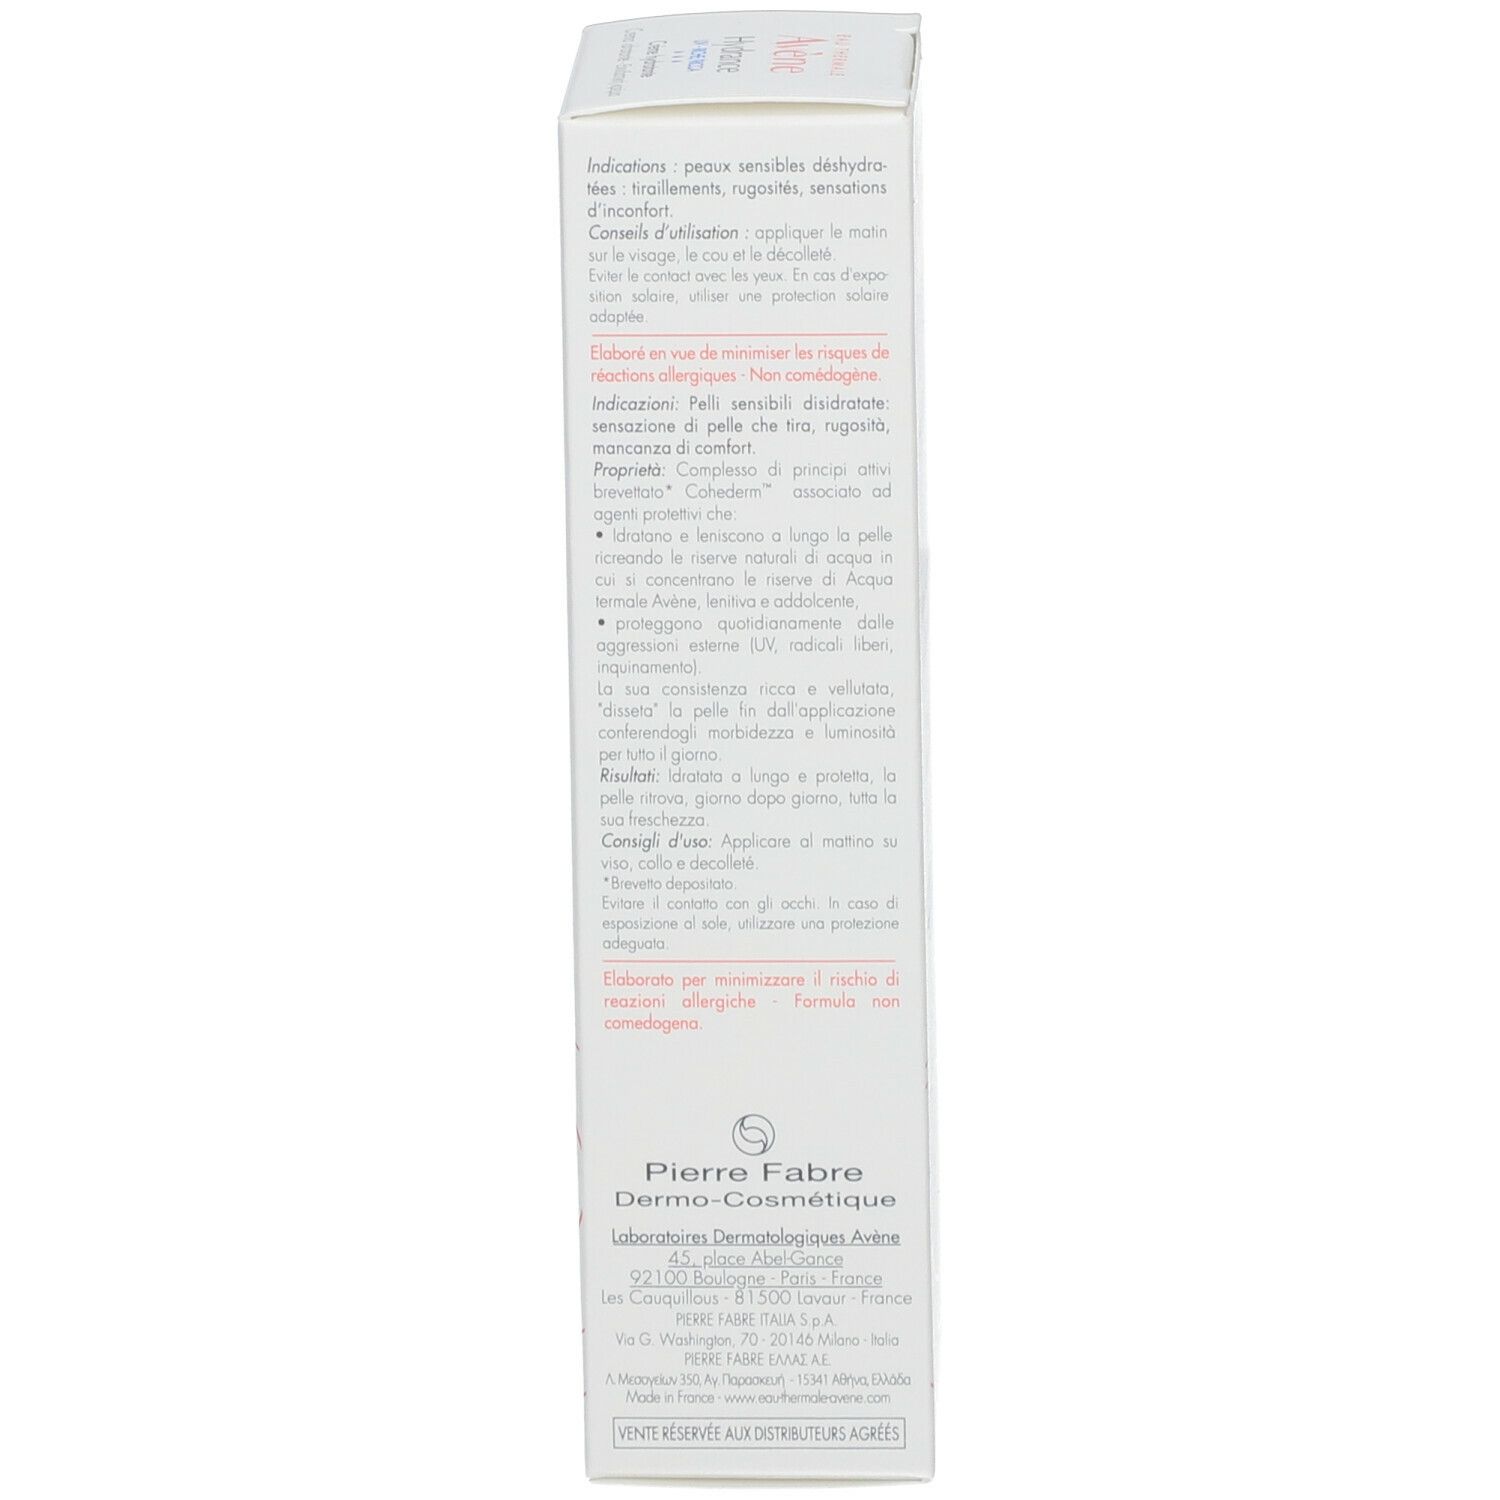 Avène Hydrance UV Ricca Crema Idratante SPF 30